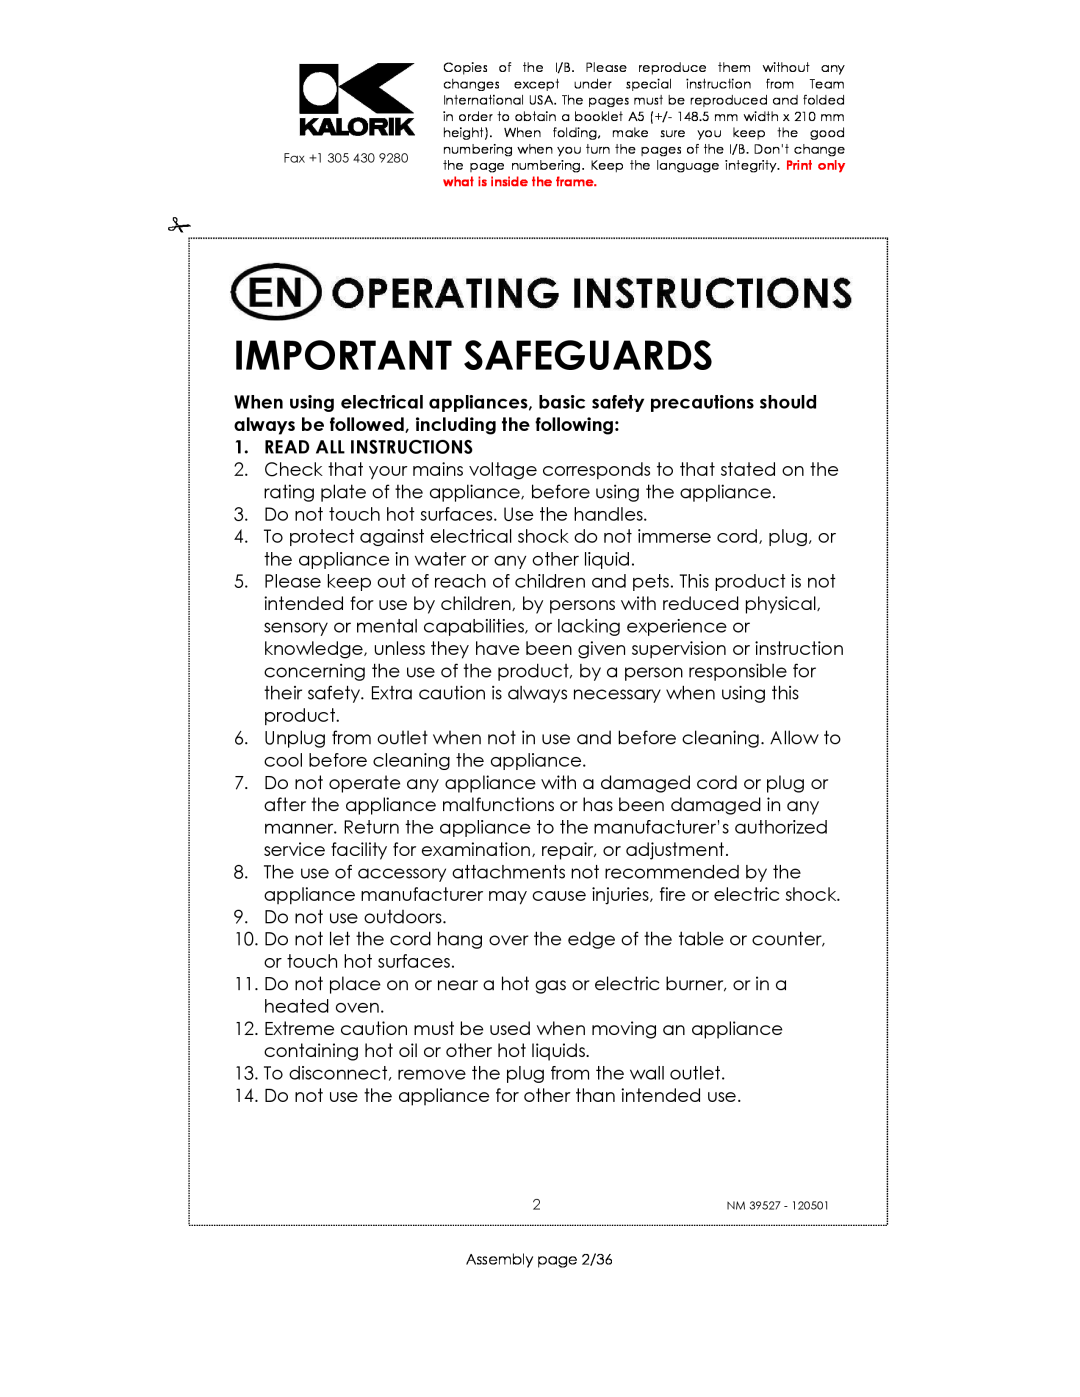 Kalorik NM 39527 manual Important Safeguards, Read All Instructions 